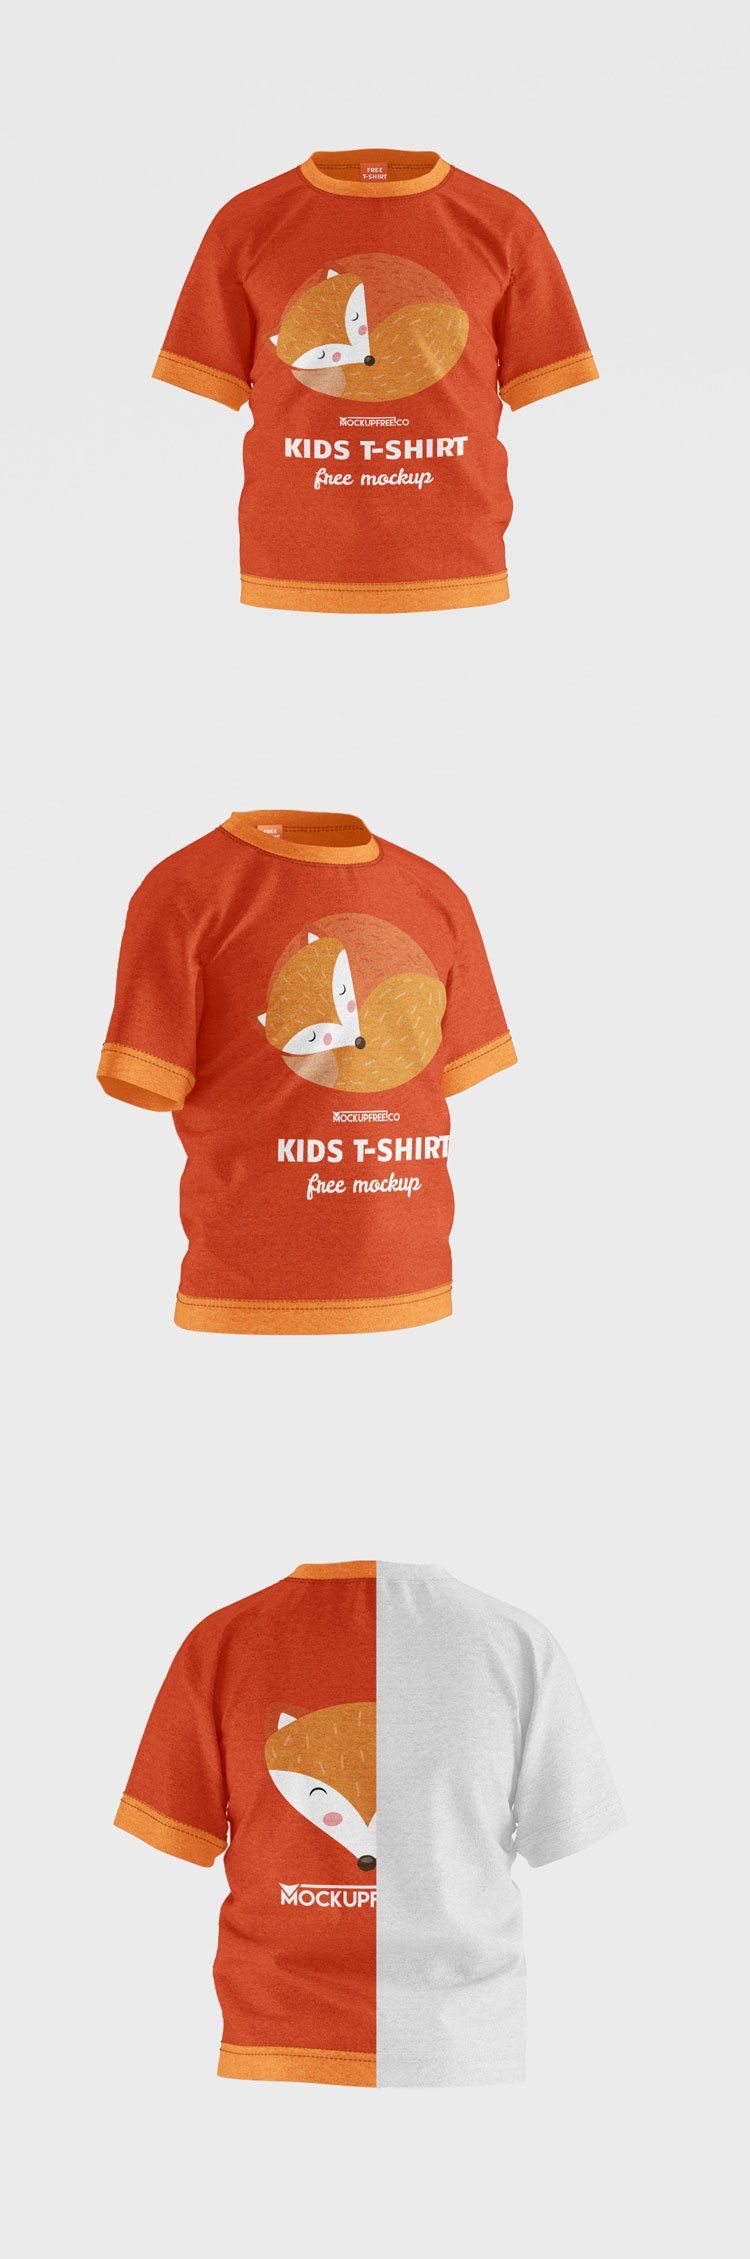 kids t-shirt mockup psd